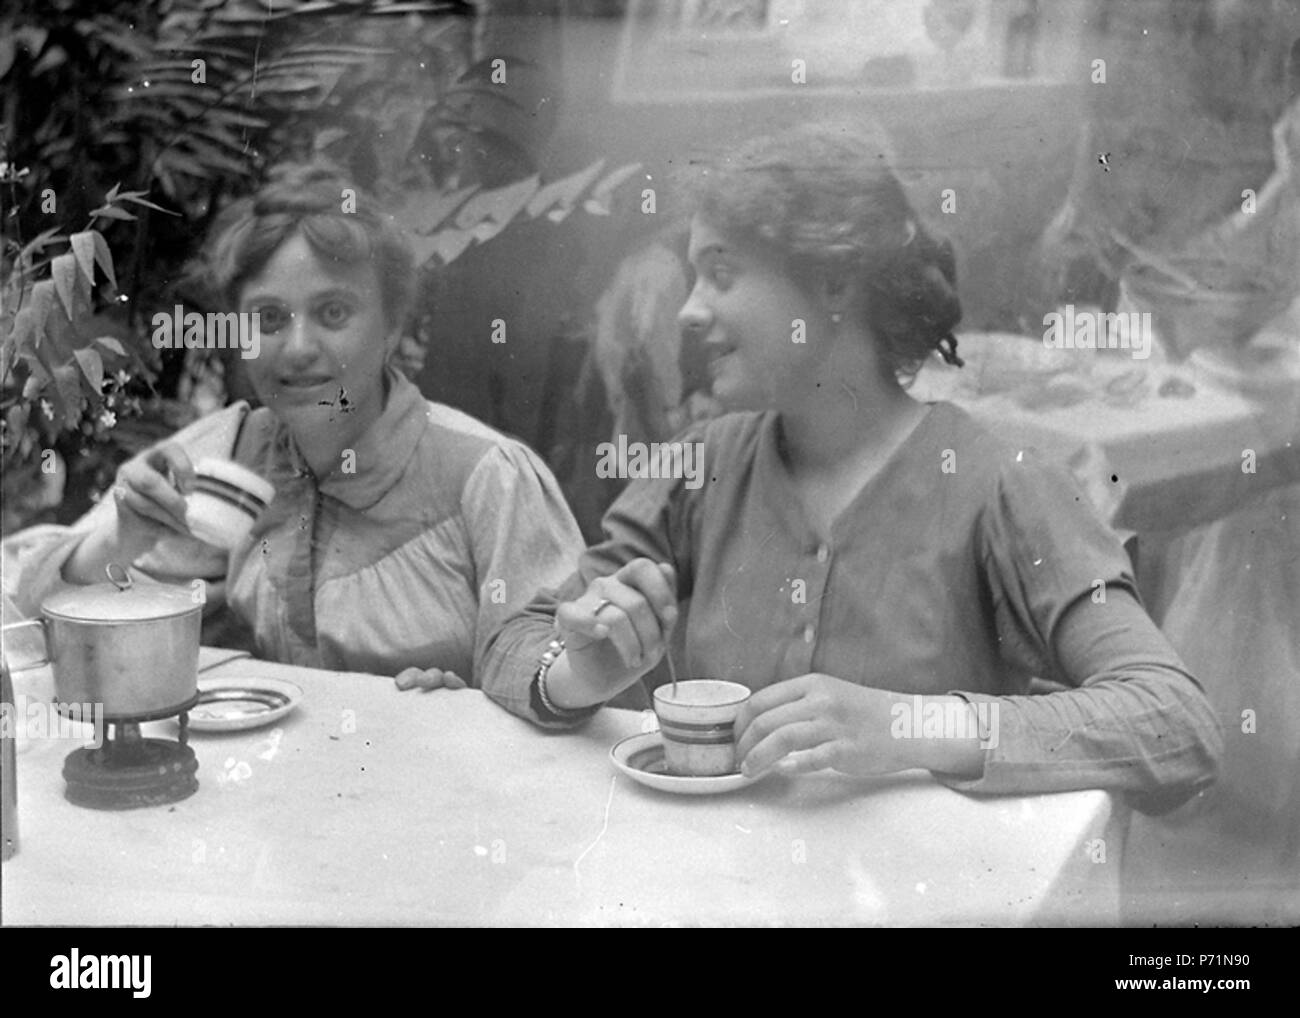 OLYMPUS DIGITAL CAMERA 8 Baldomer Gili Roig. Escena en un cafè (Roma), 1900 - 1910 Stock Photo